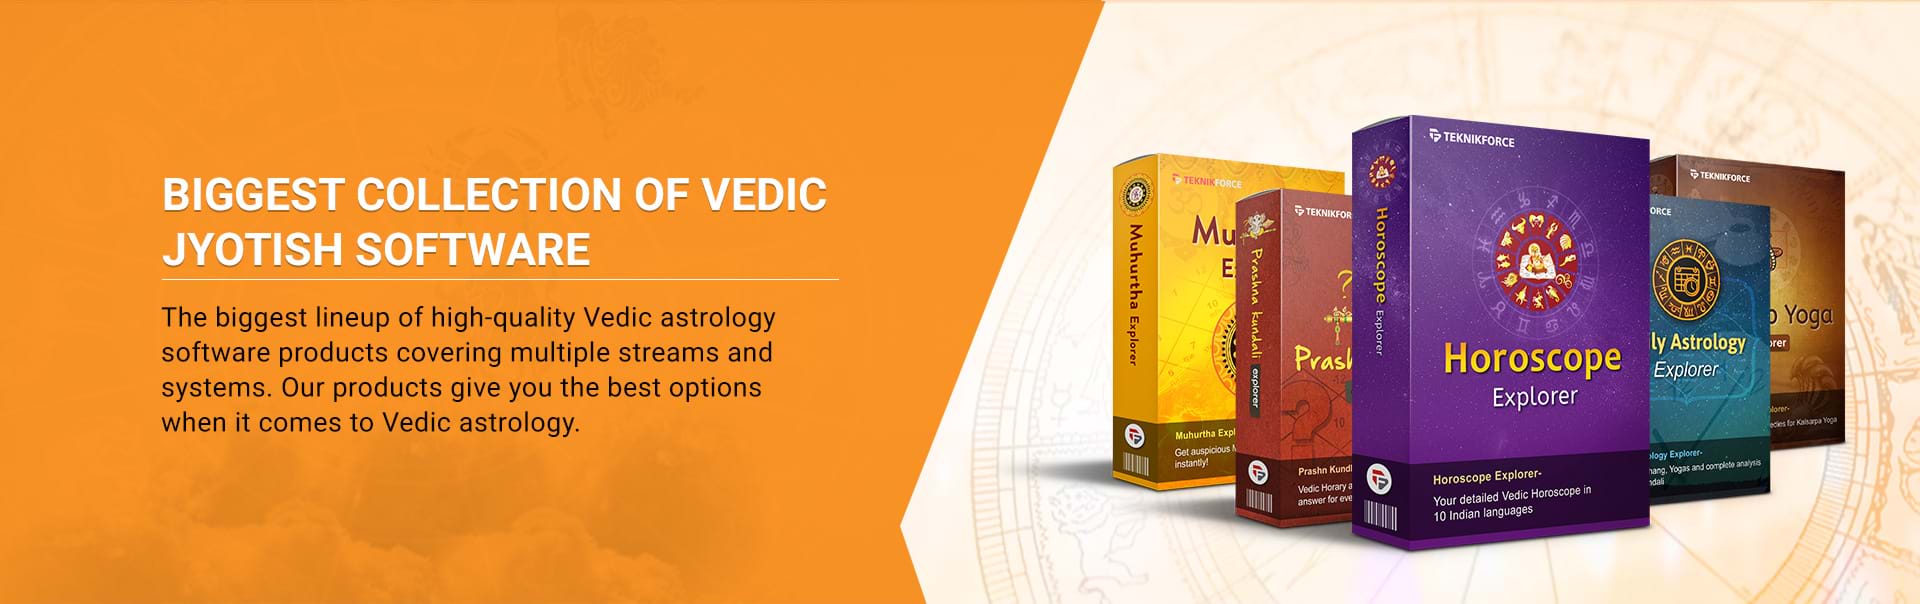 most modern vedic astrology software